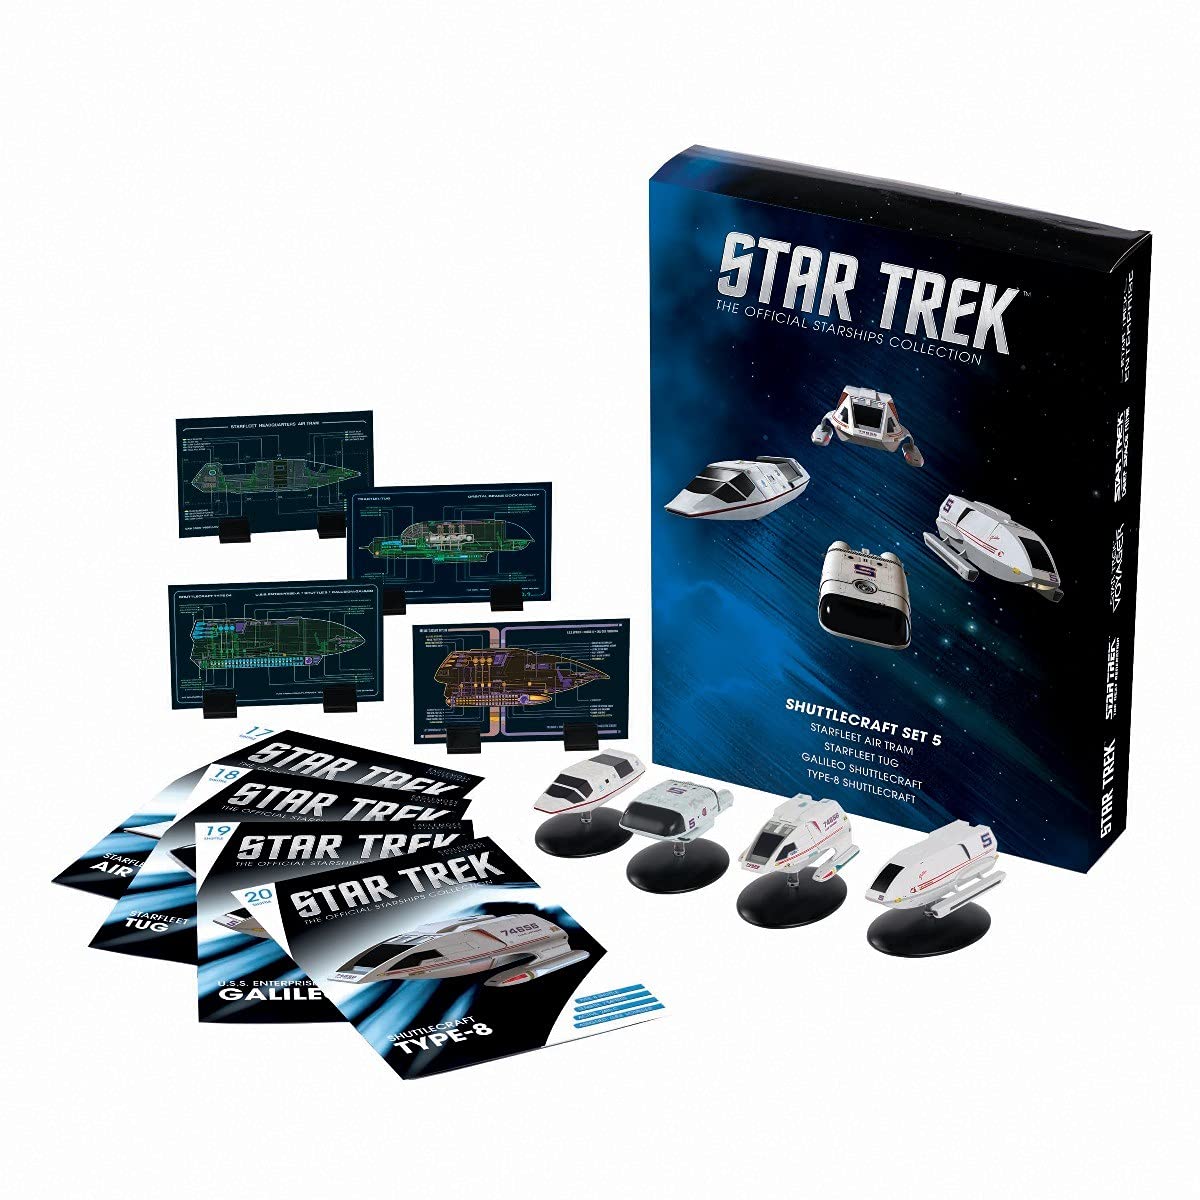 Star Trek Collector's Shuttle Set 5